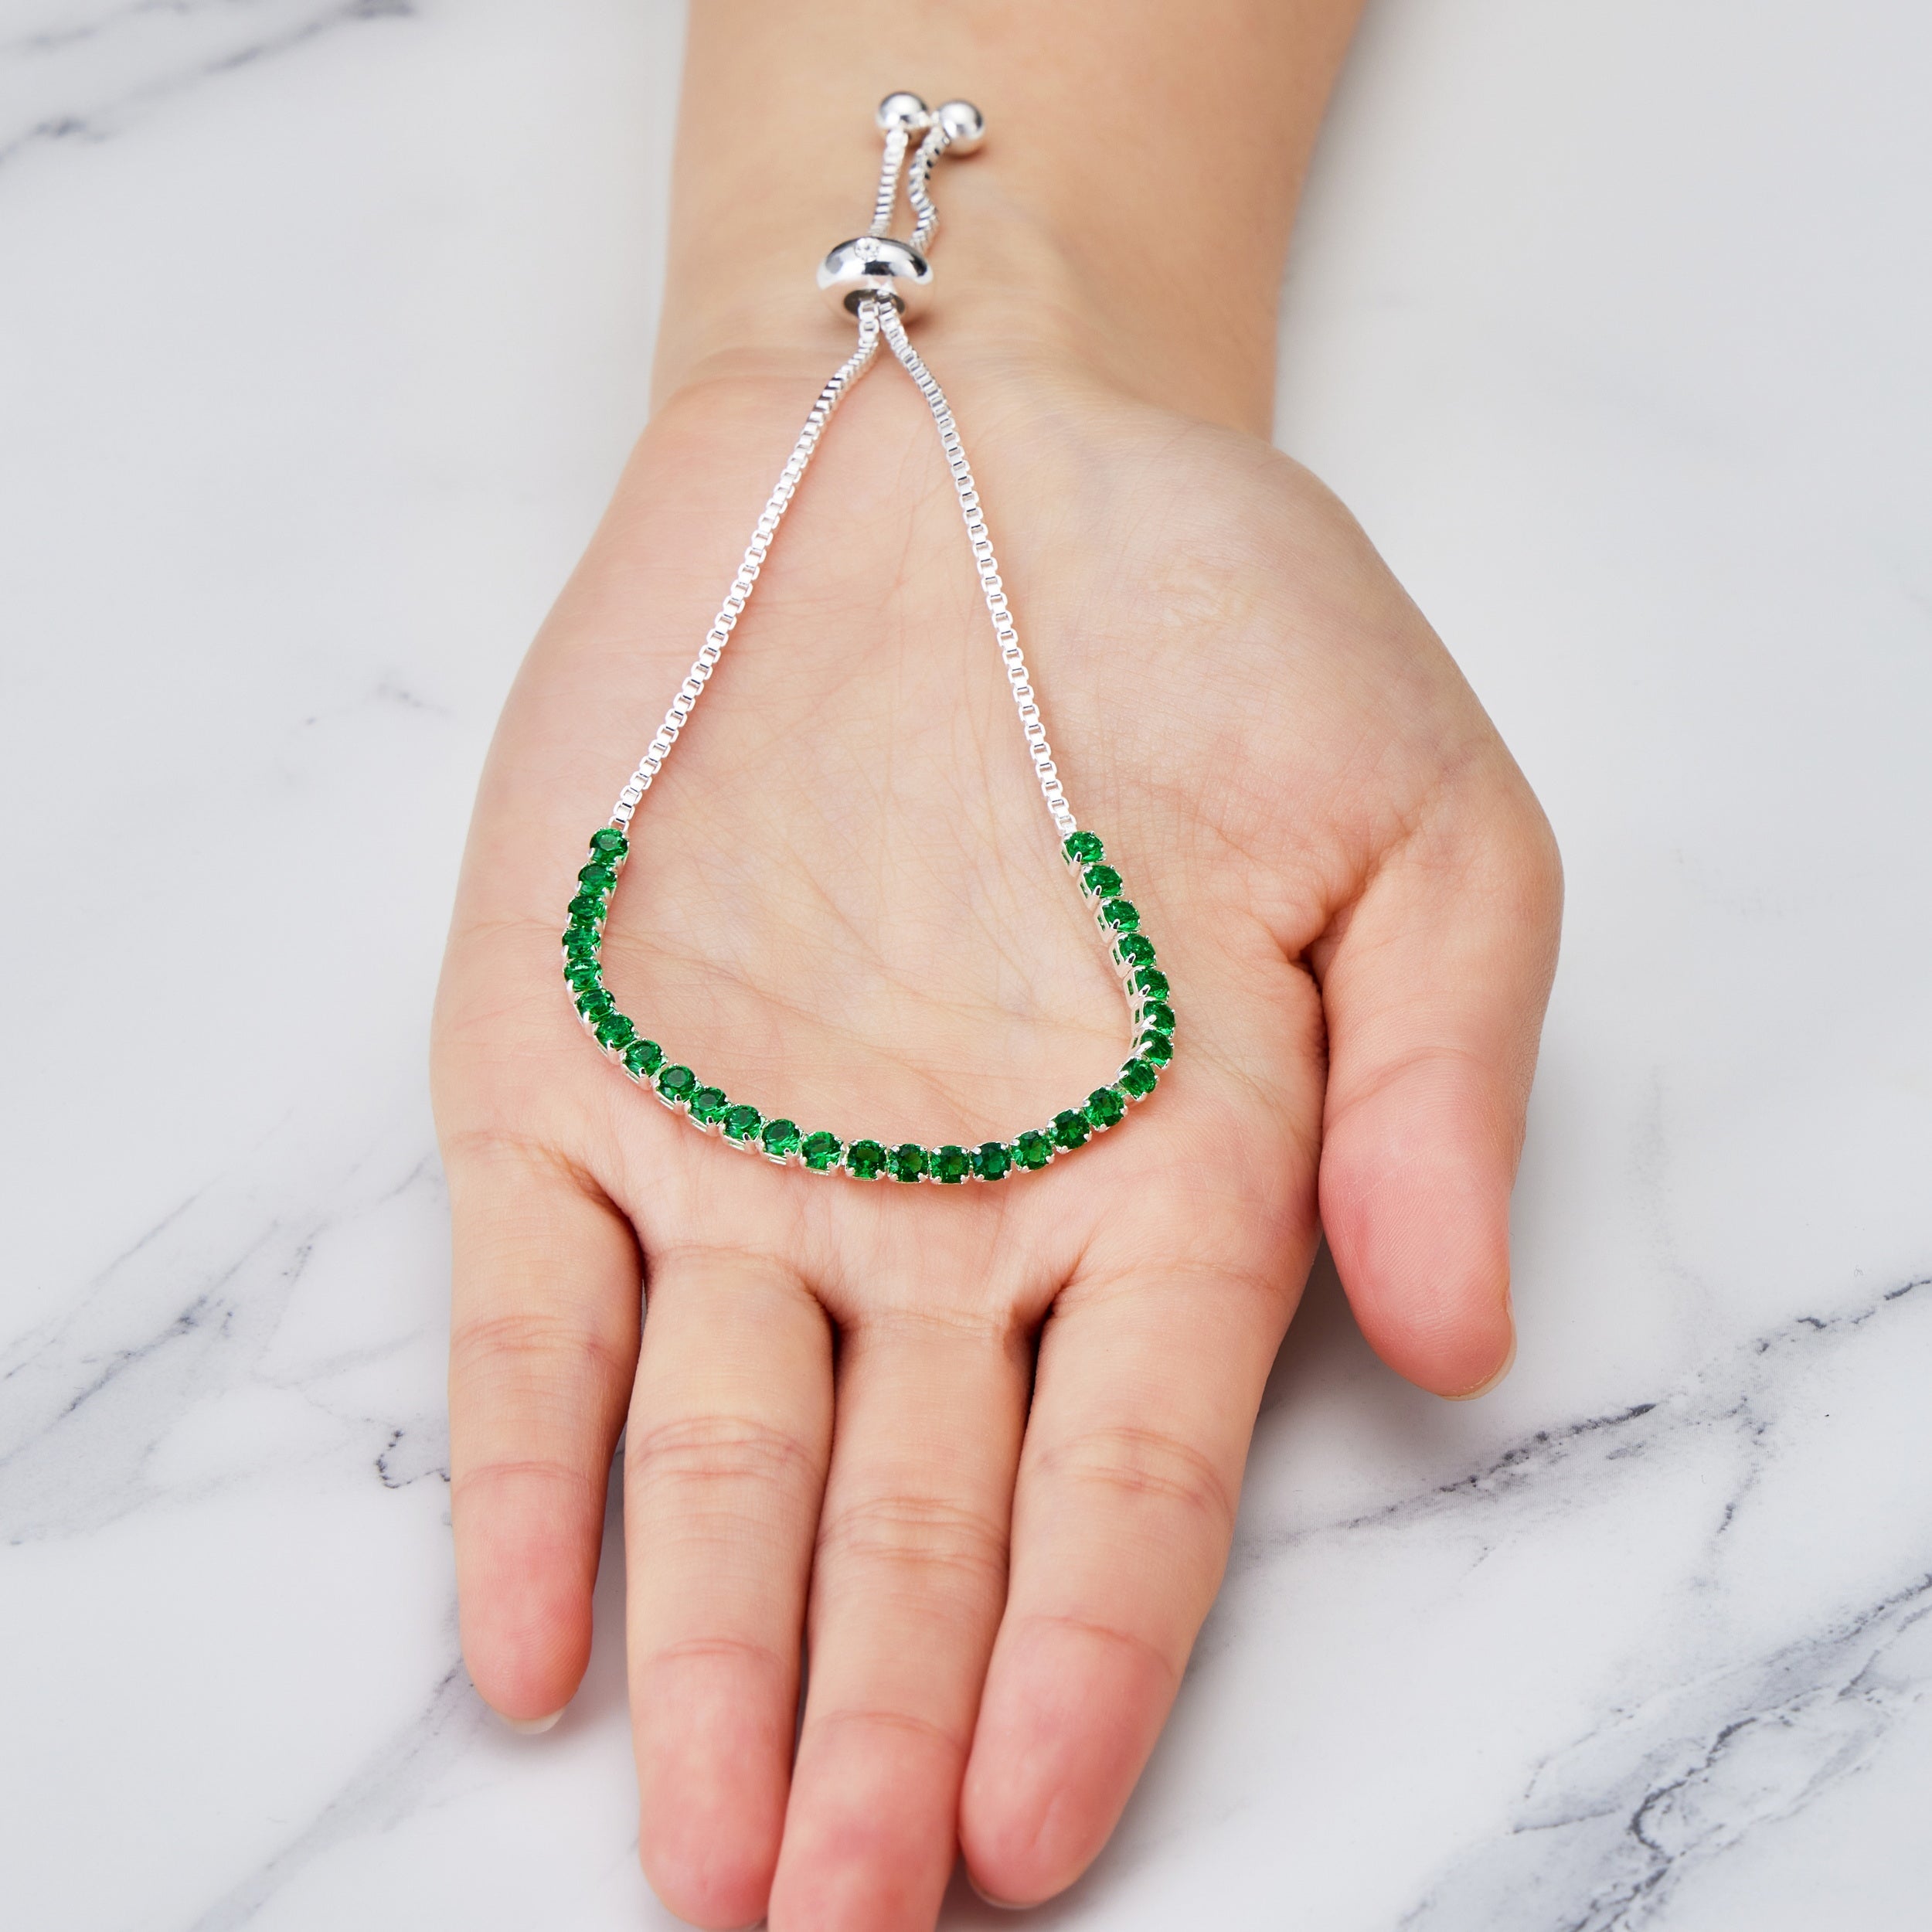 Green Tennis Friendship Bracelet Created with Zircondia® Crystals